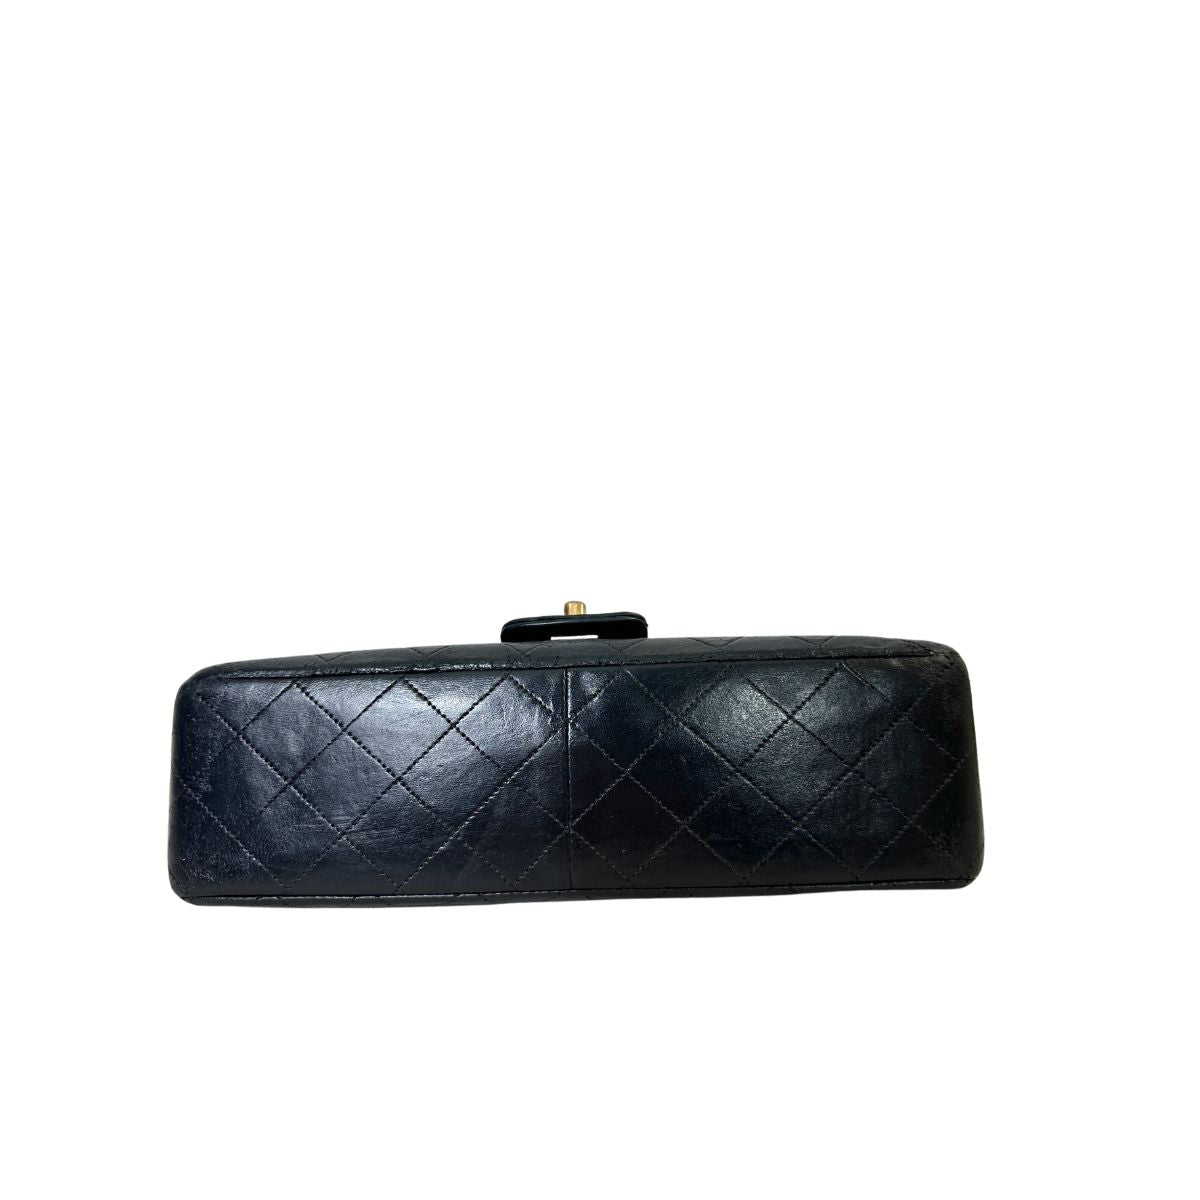 Chanel Chanel Medium Classic Flapbag - Shoulder bag - Etoile Luxury Vintage